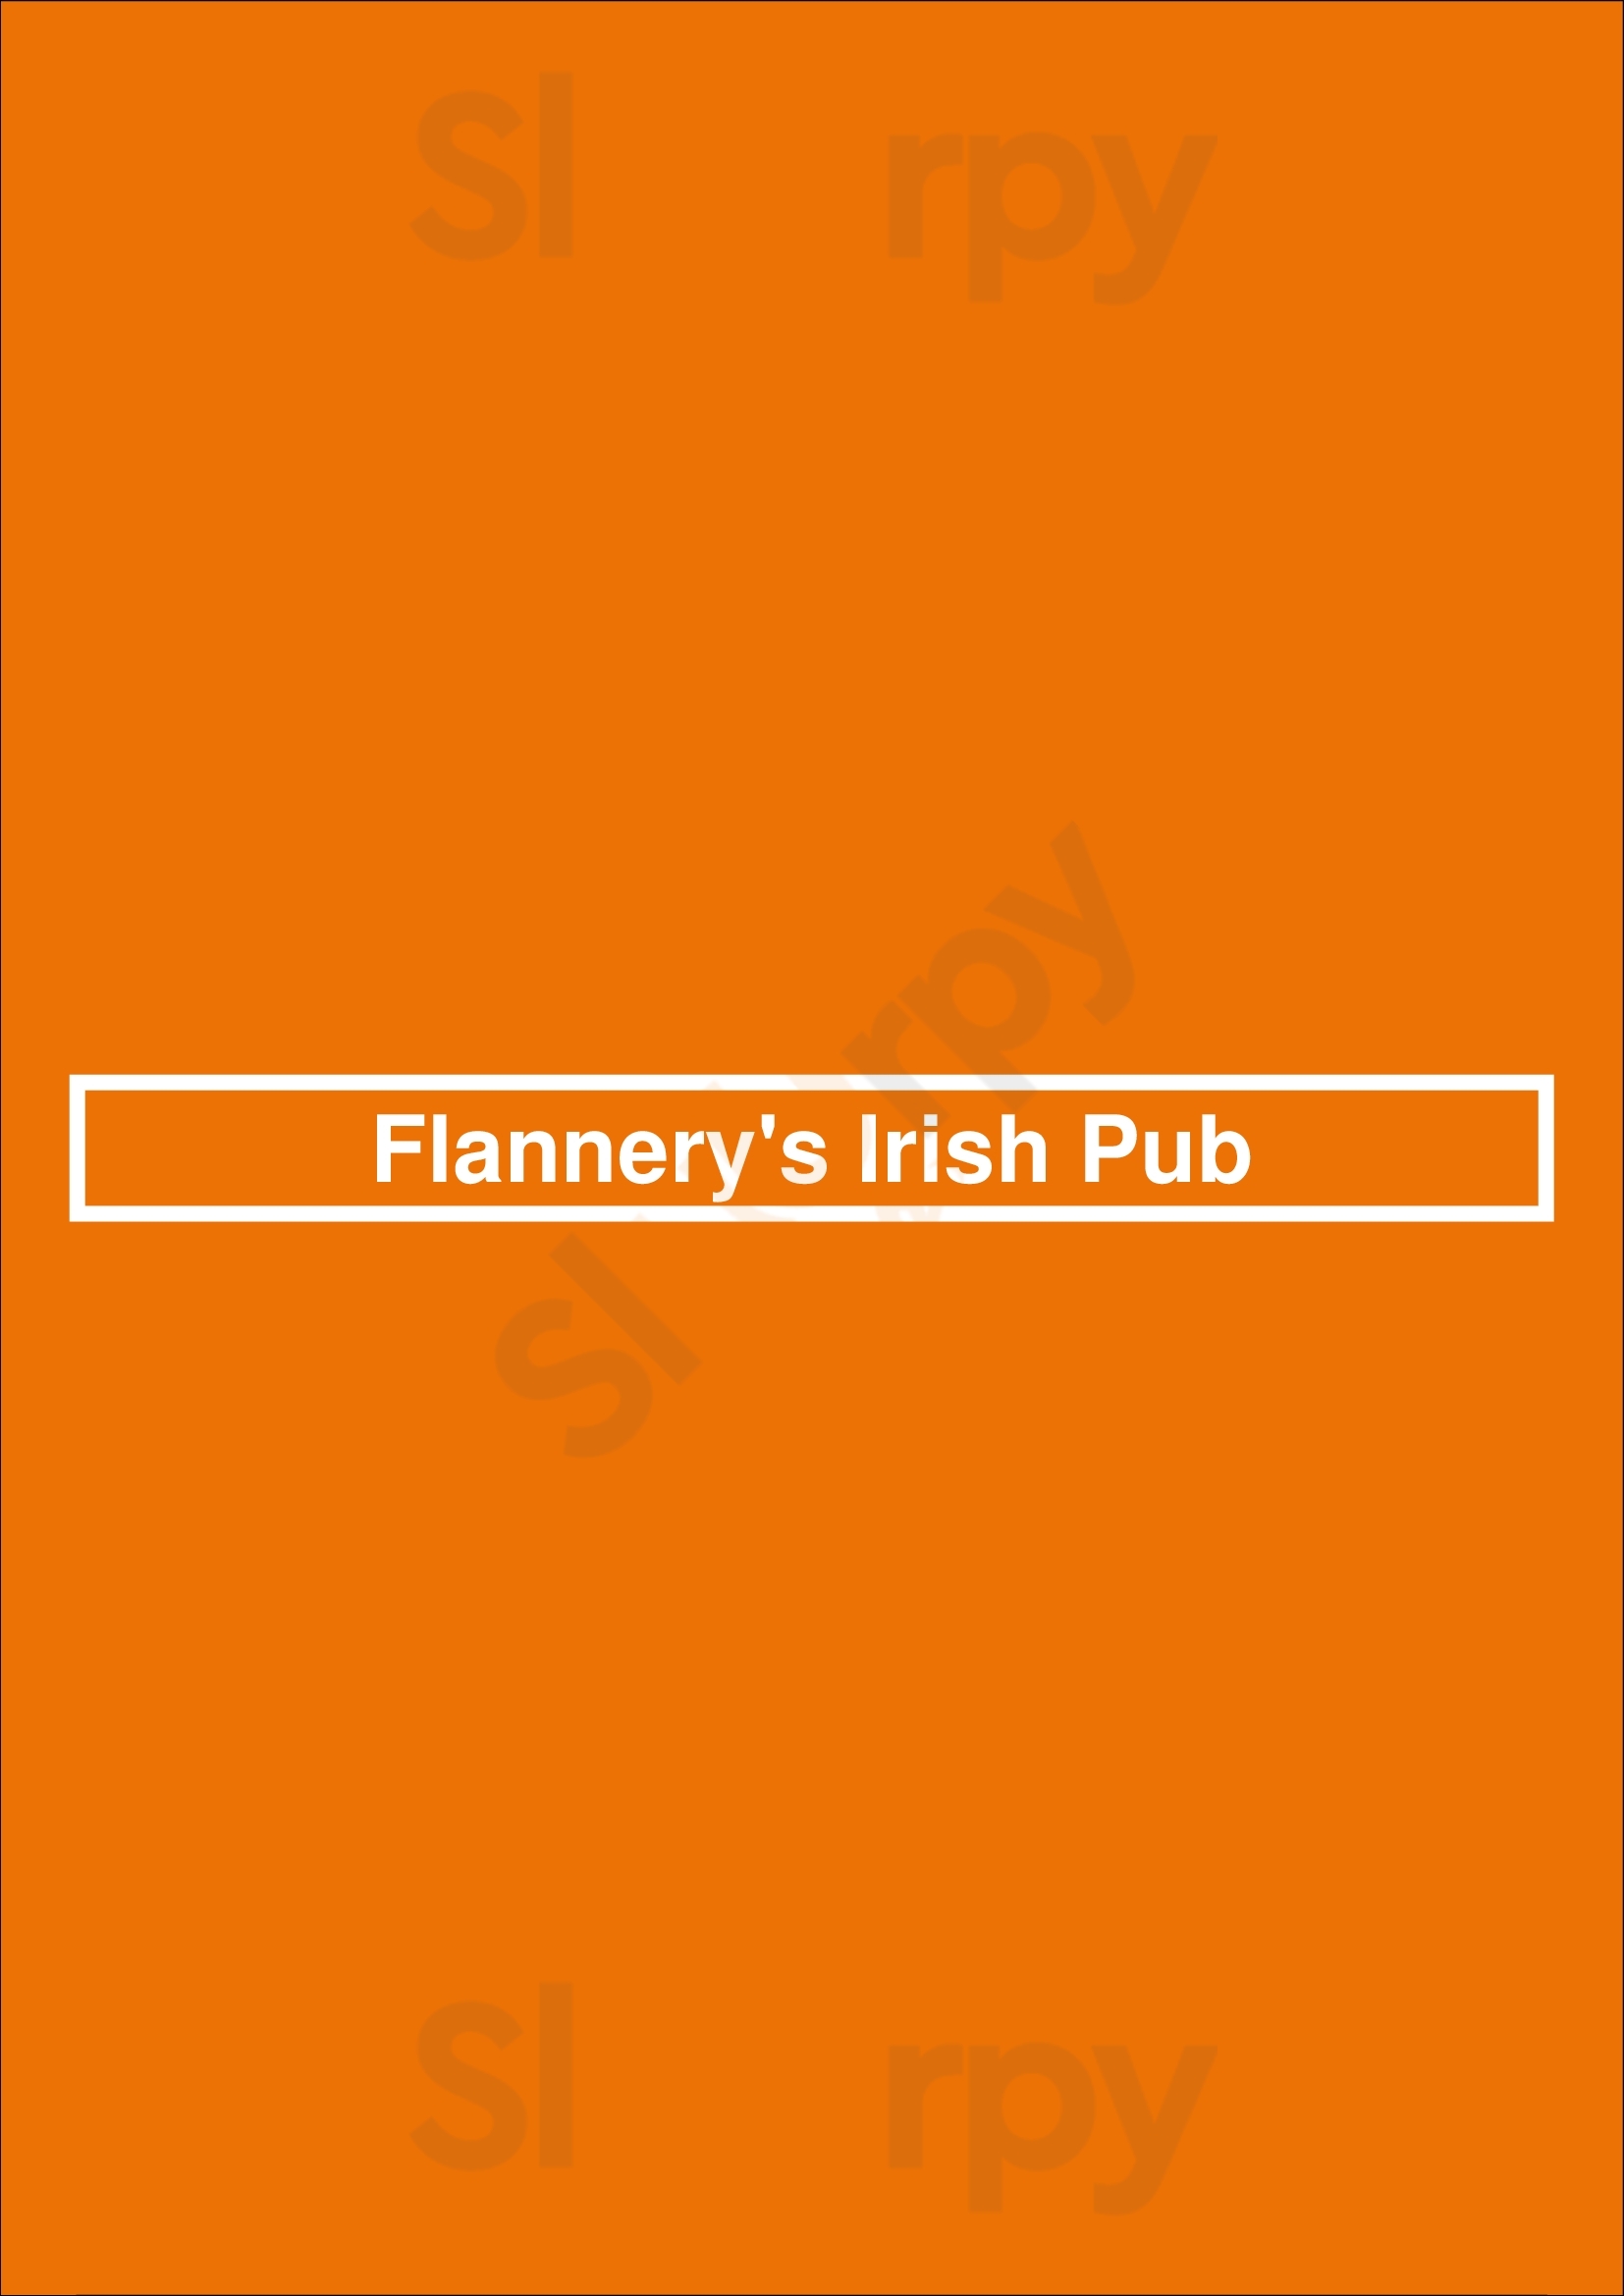 Flannery's Irish Pub Milwaukee Menu - 1